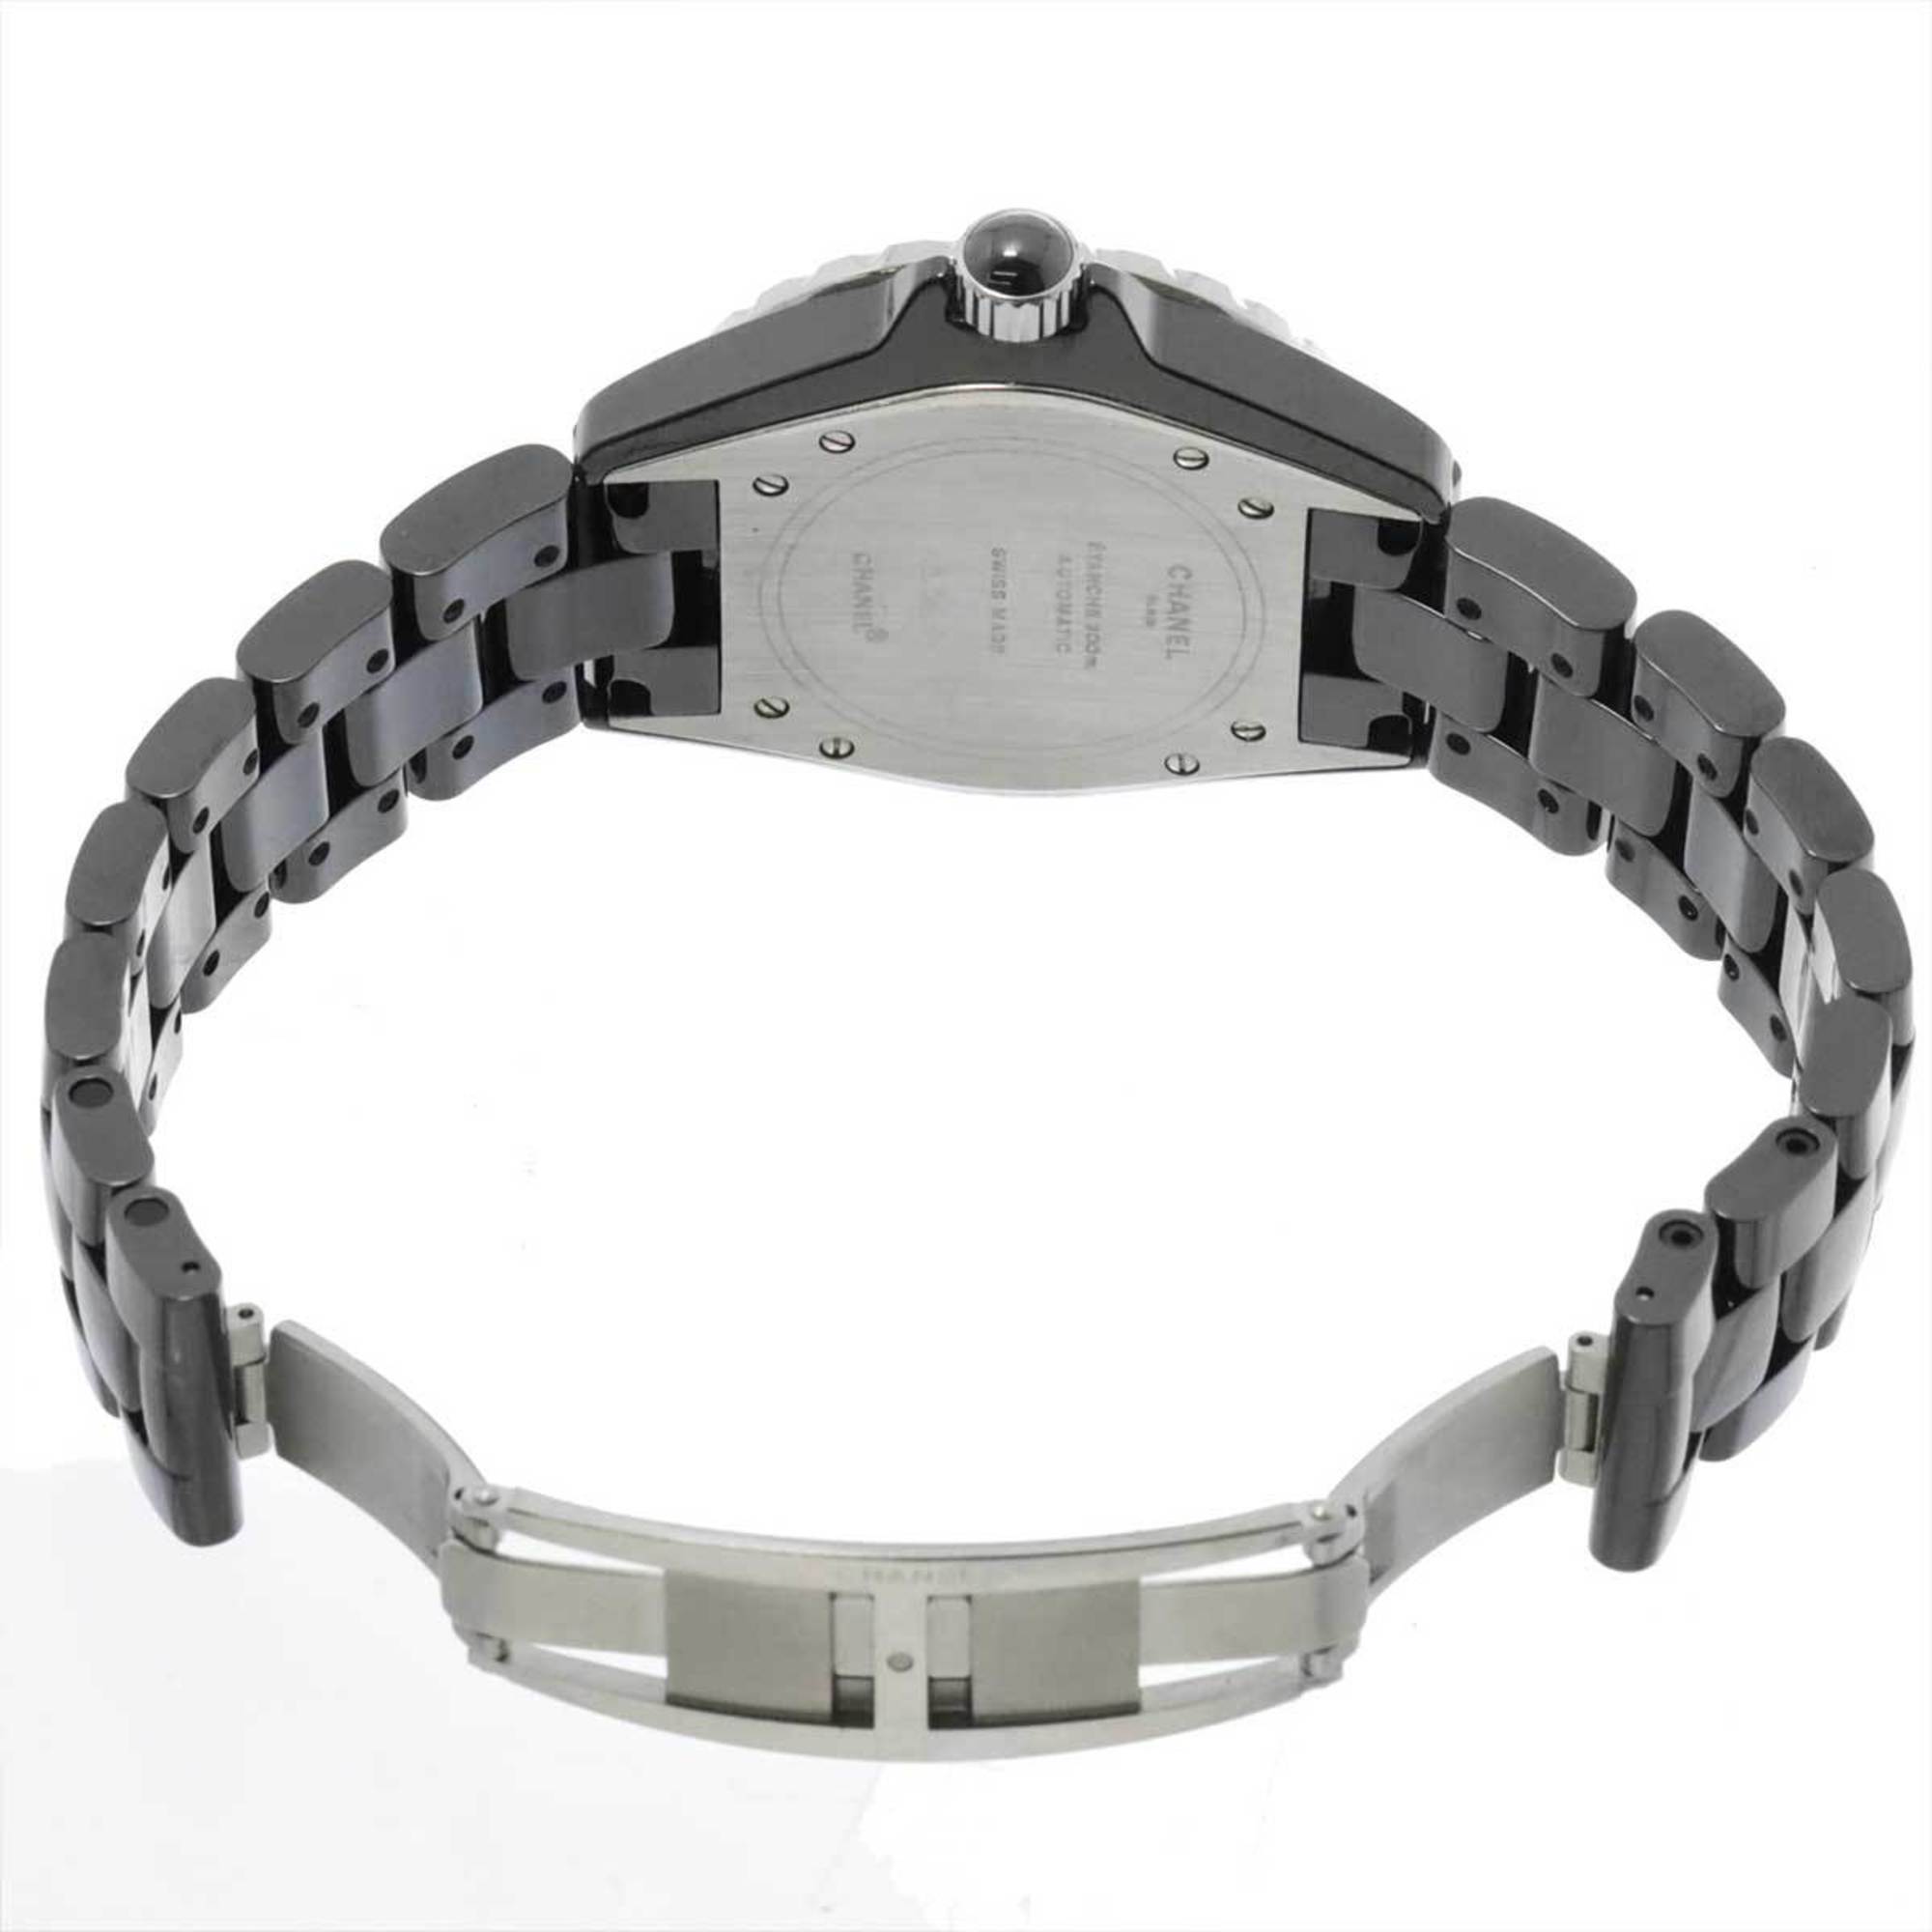 Chanel CHANEL J12 38mm H0950 Genuine Diamond Bezel Men's Watch Black Ceramic Date Automatic Self-Winding